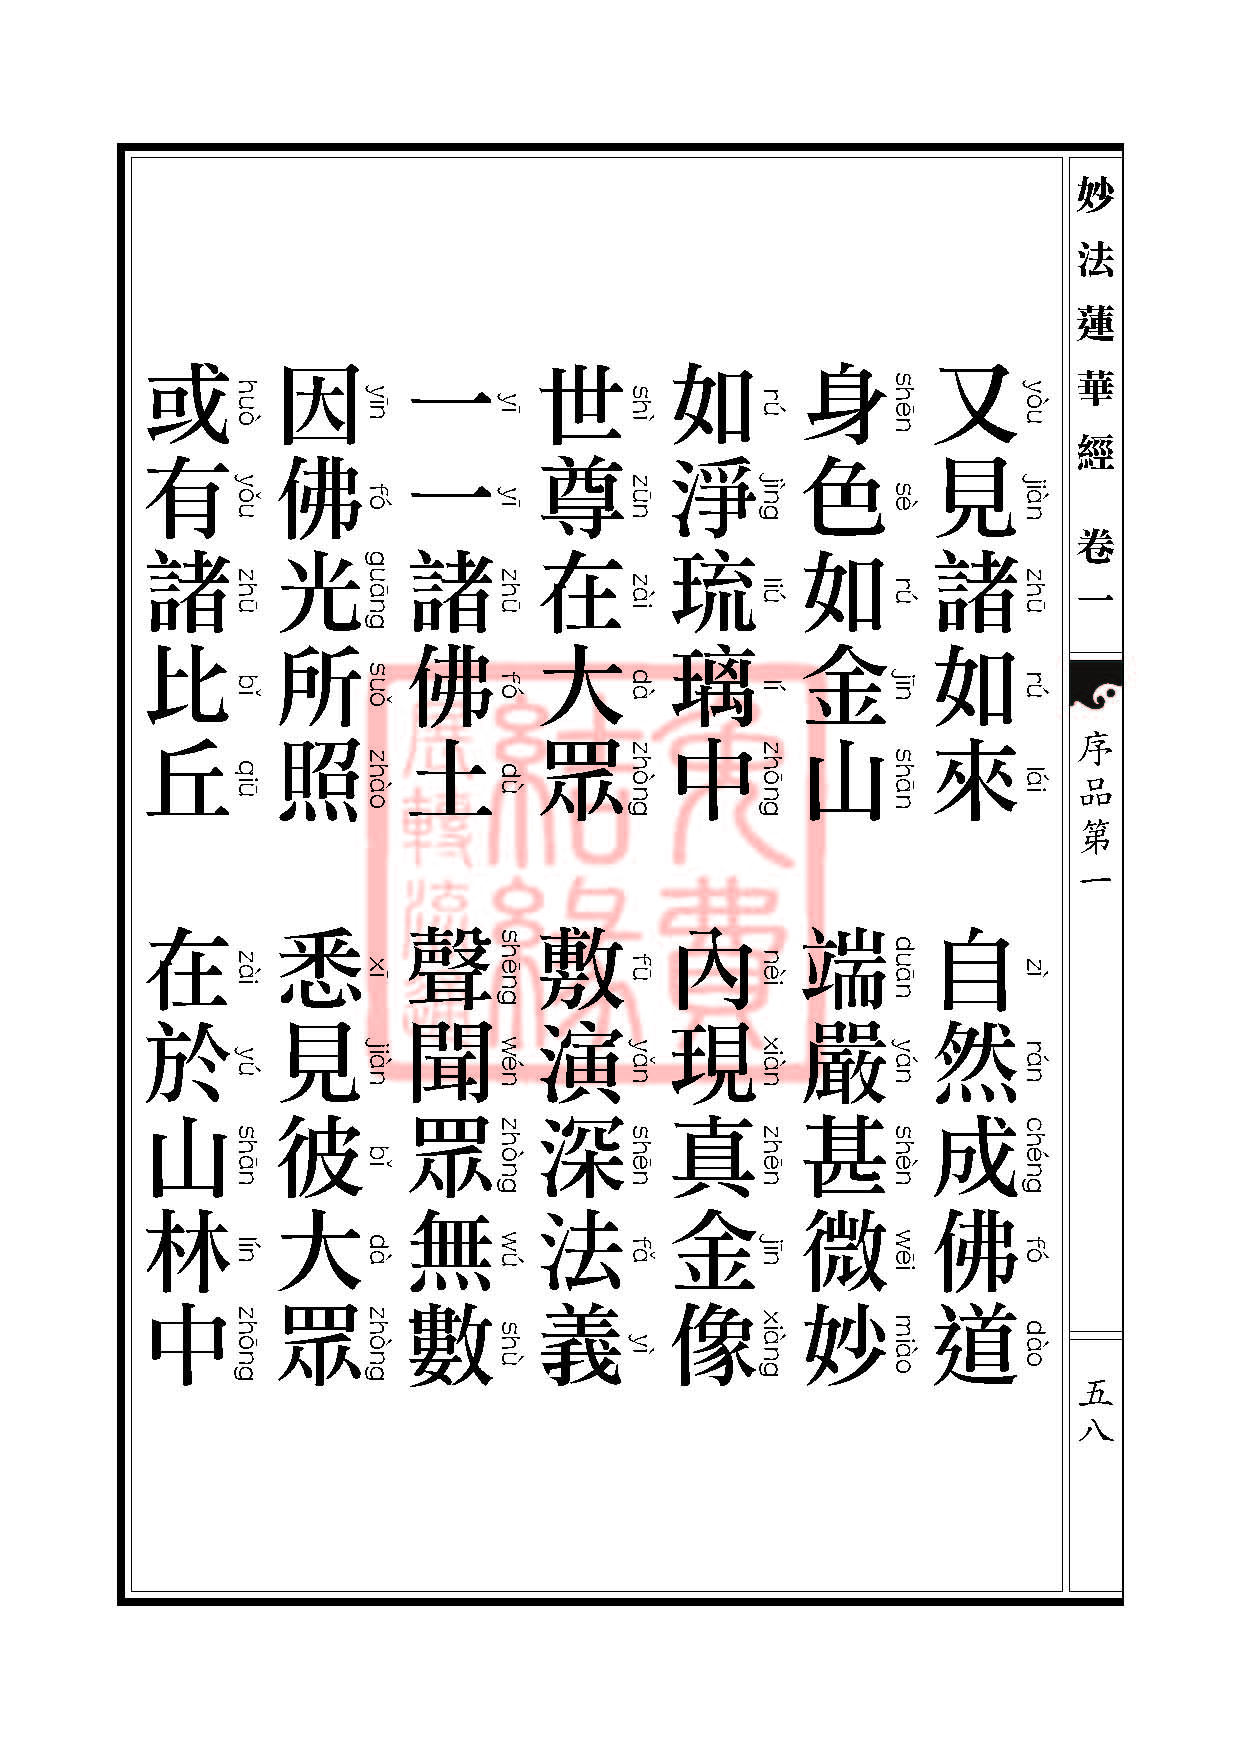 Book_FHJ_HK-A6-PY_Web_页面_058.jpg